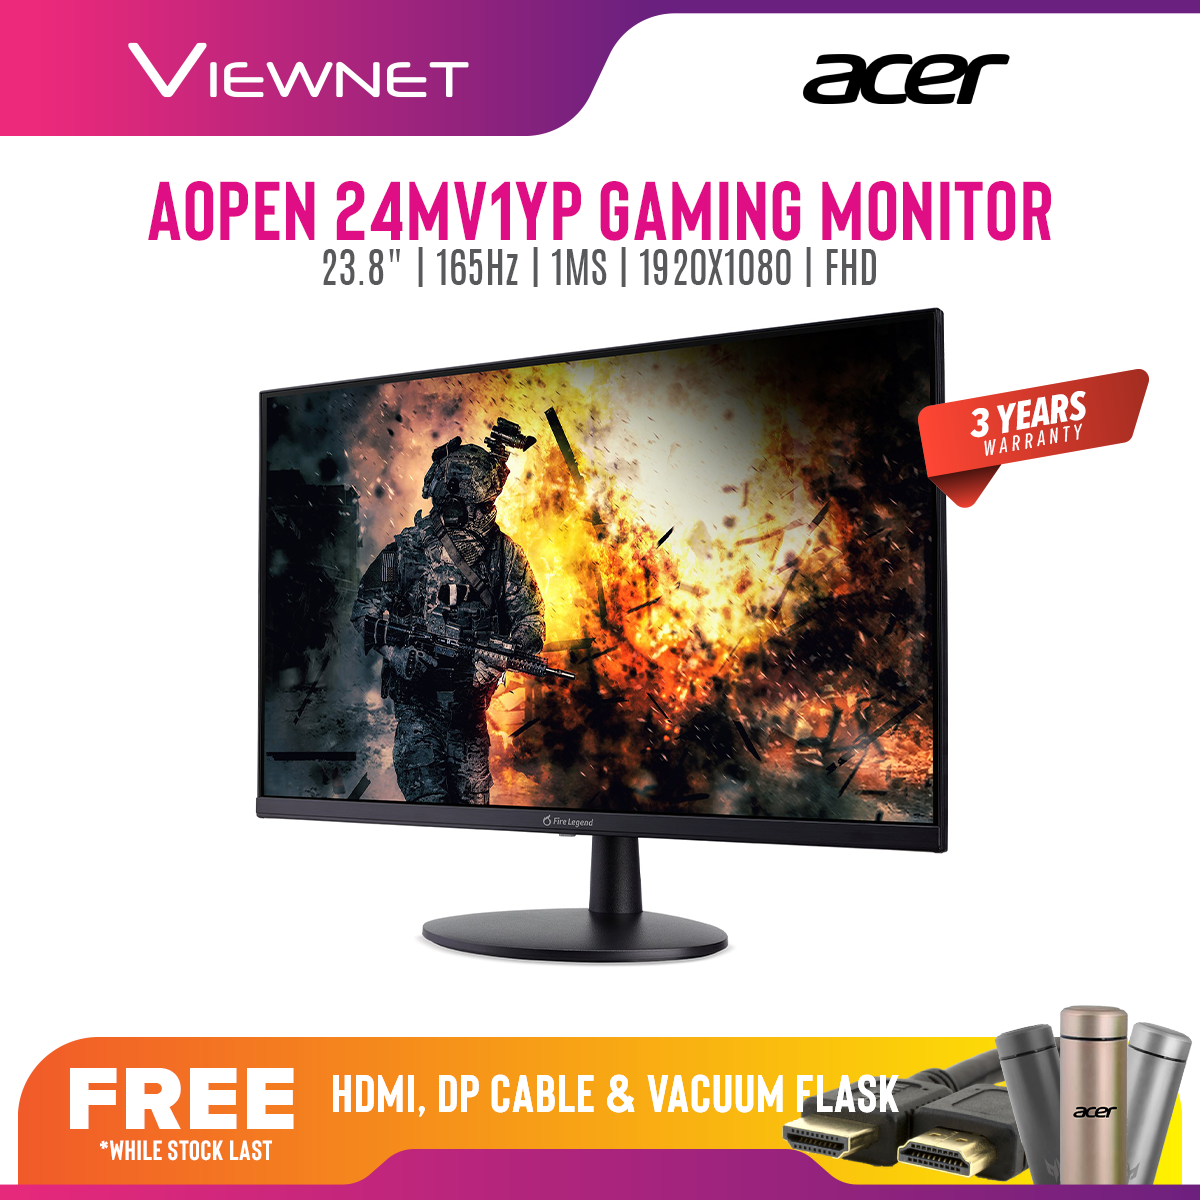 Acer AOpen 24MV1Y P Flat 23.8